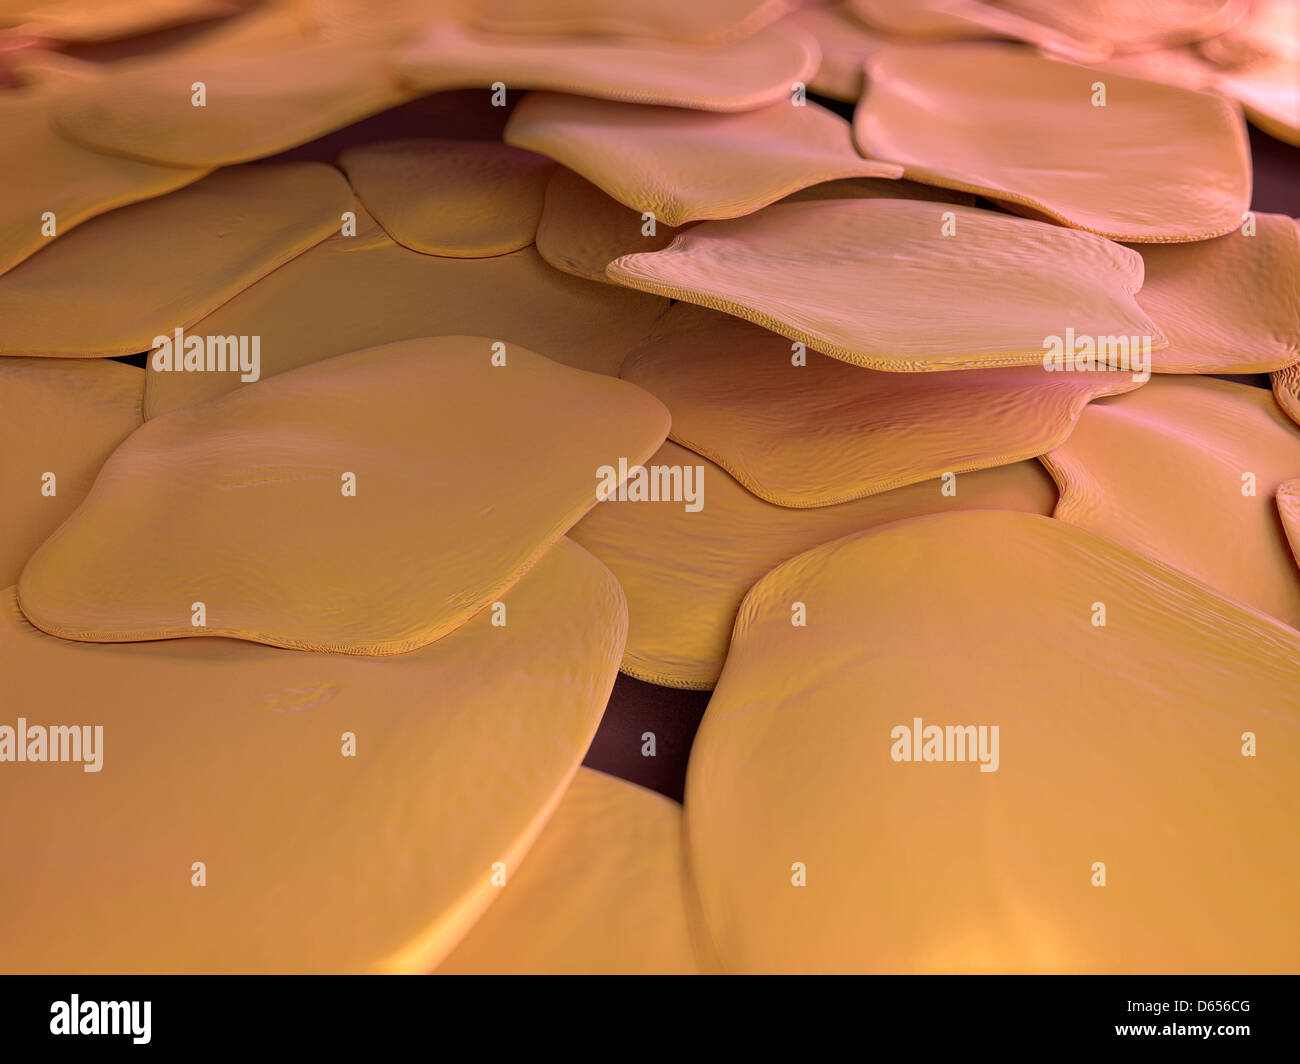 Human skin cells, artwork Stock Photo